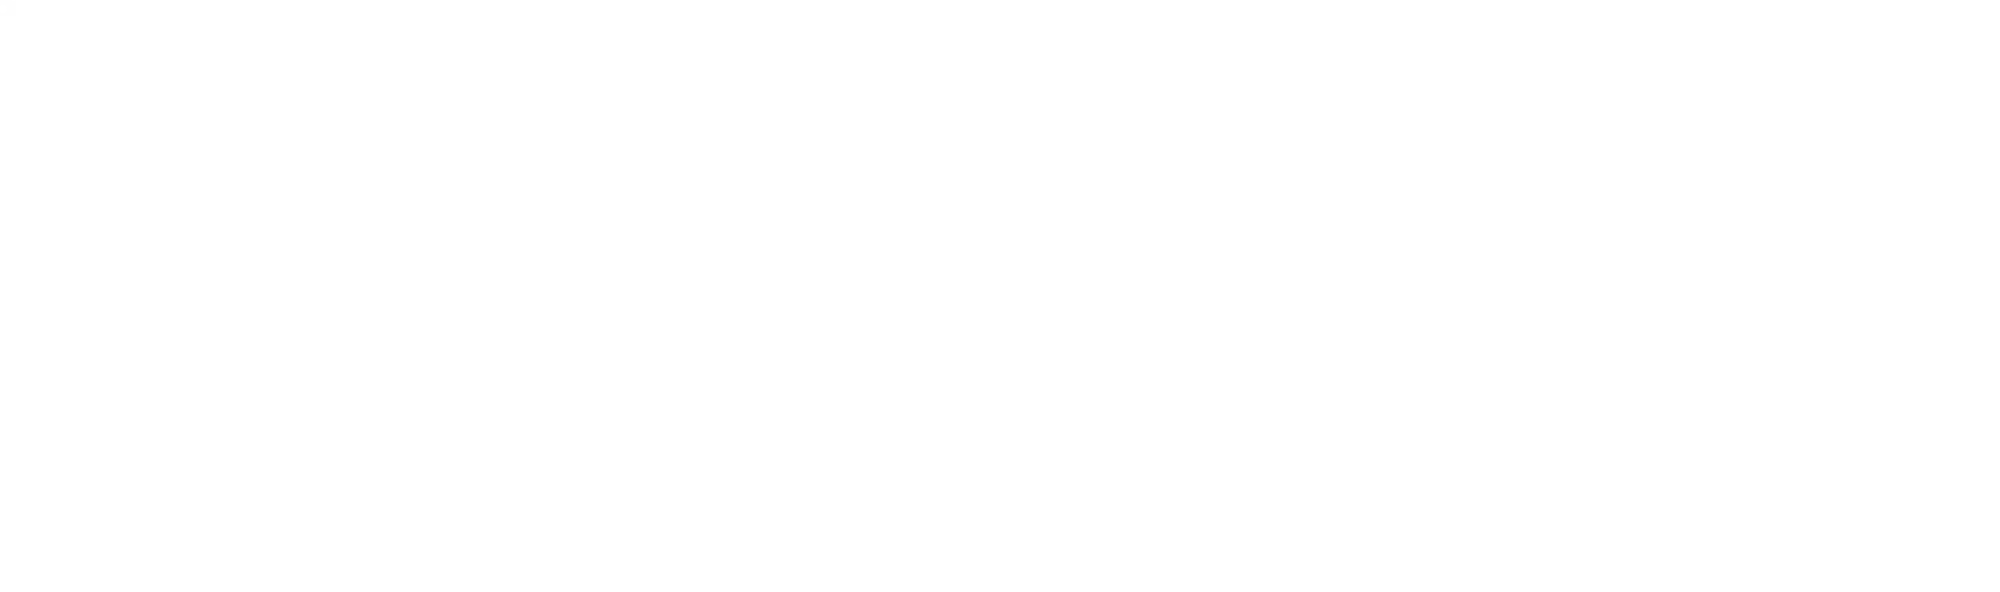 halftone pattern